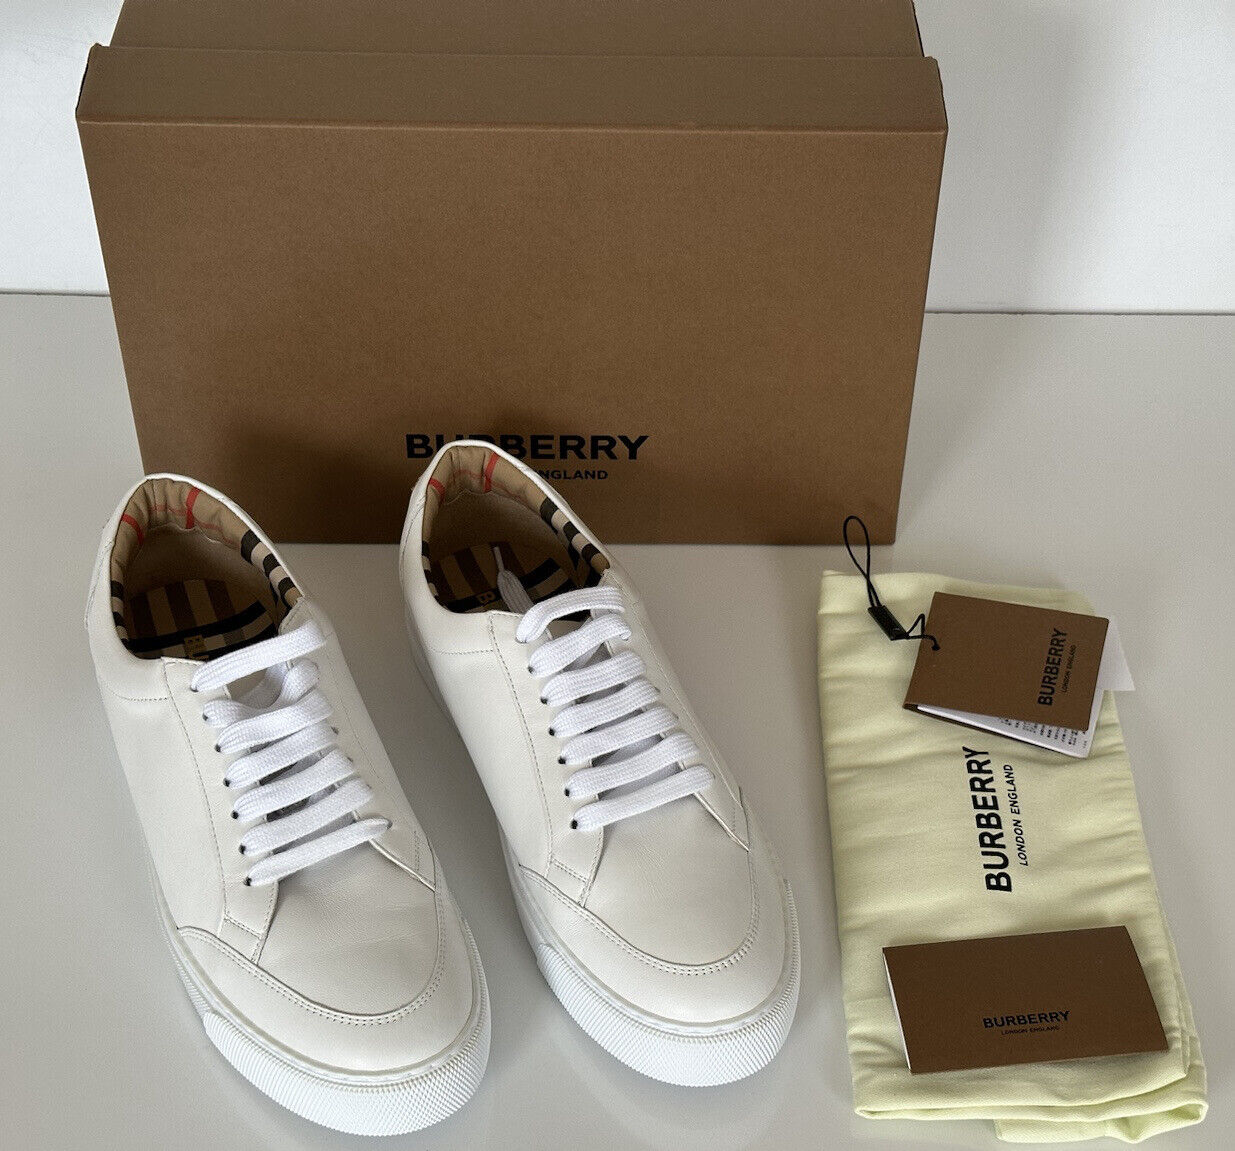 NIB Burberry Women's White Low Top  Leather Sneakers 9 US (39 Eu) 8043210 Italy